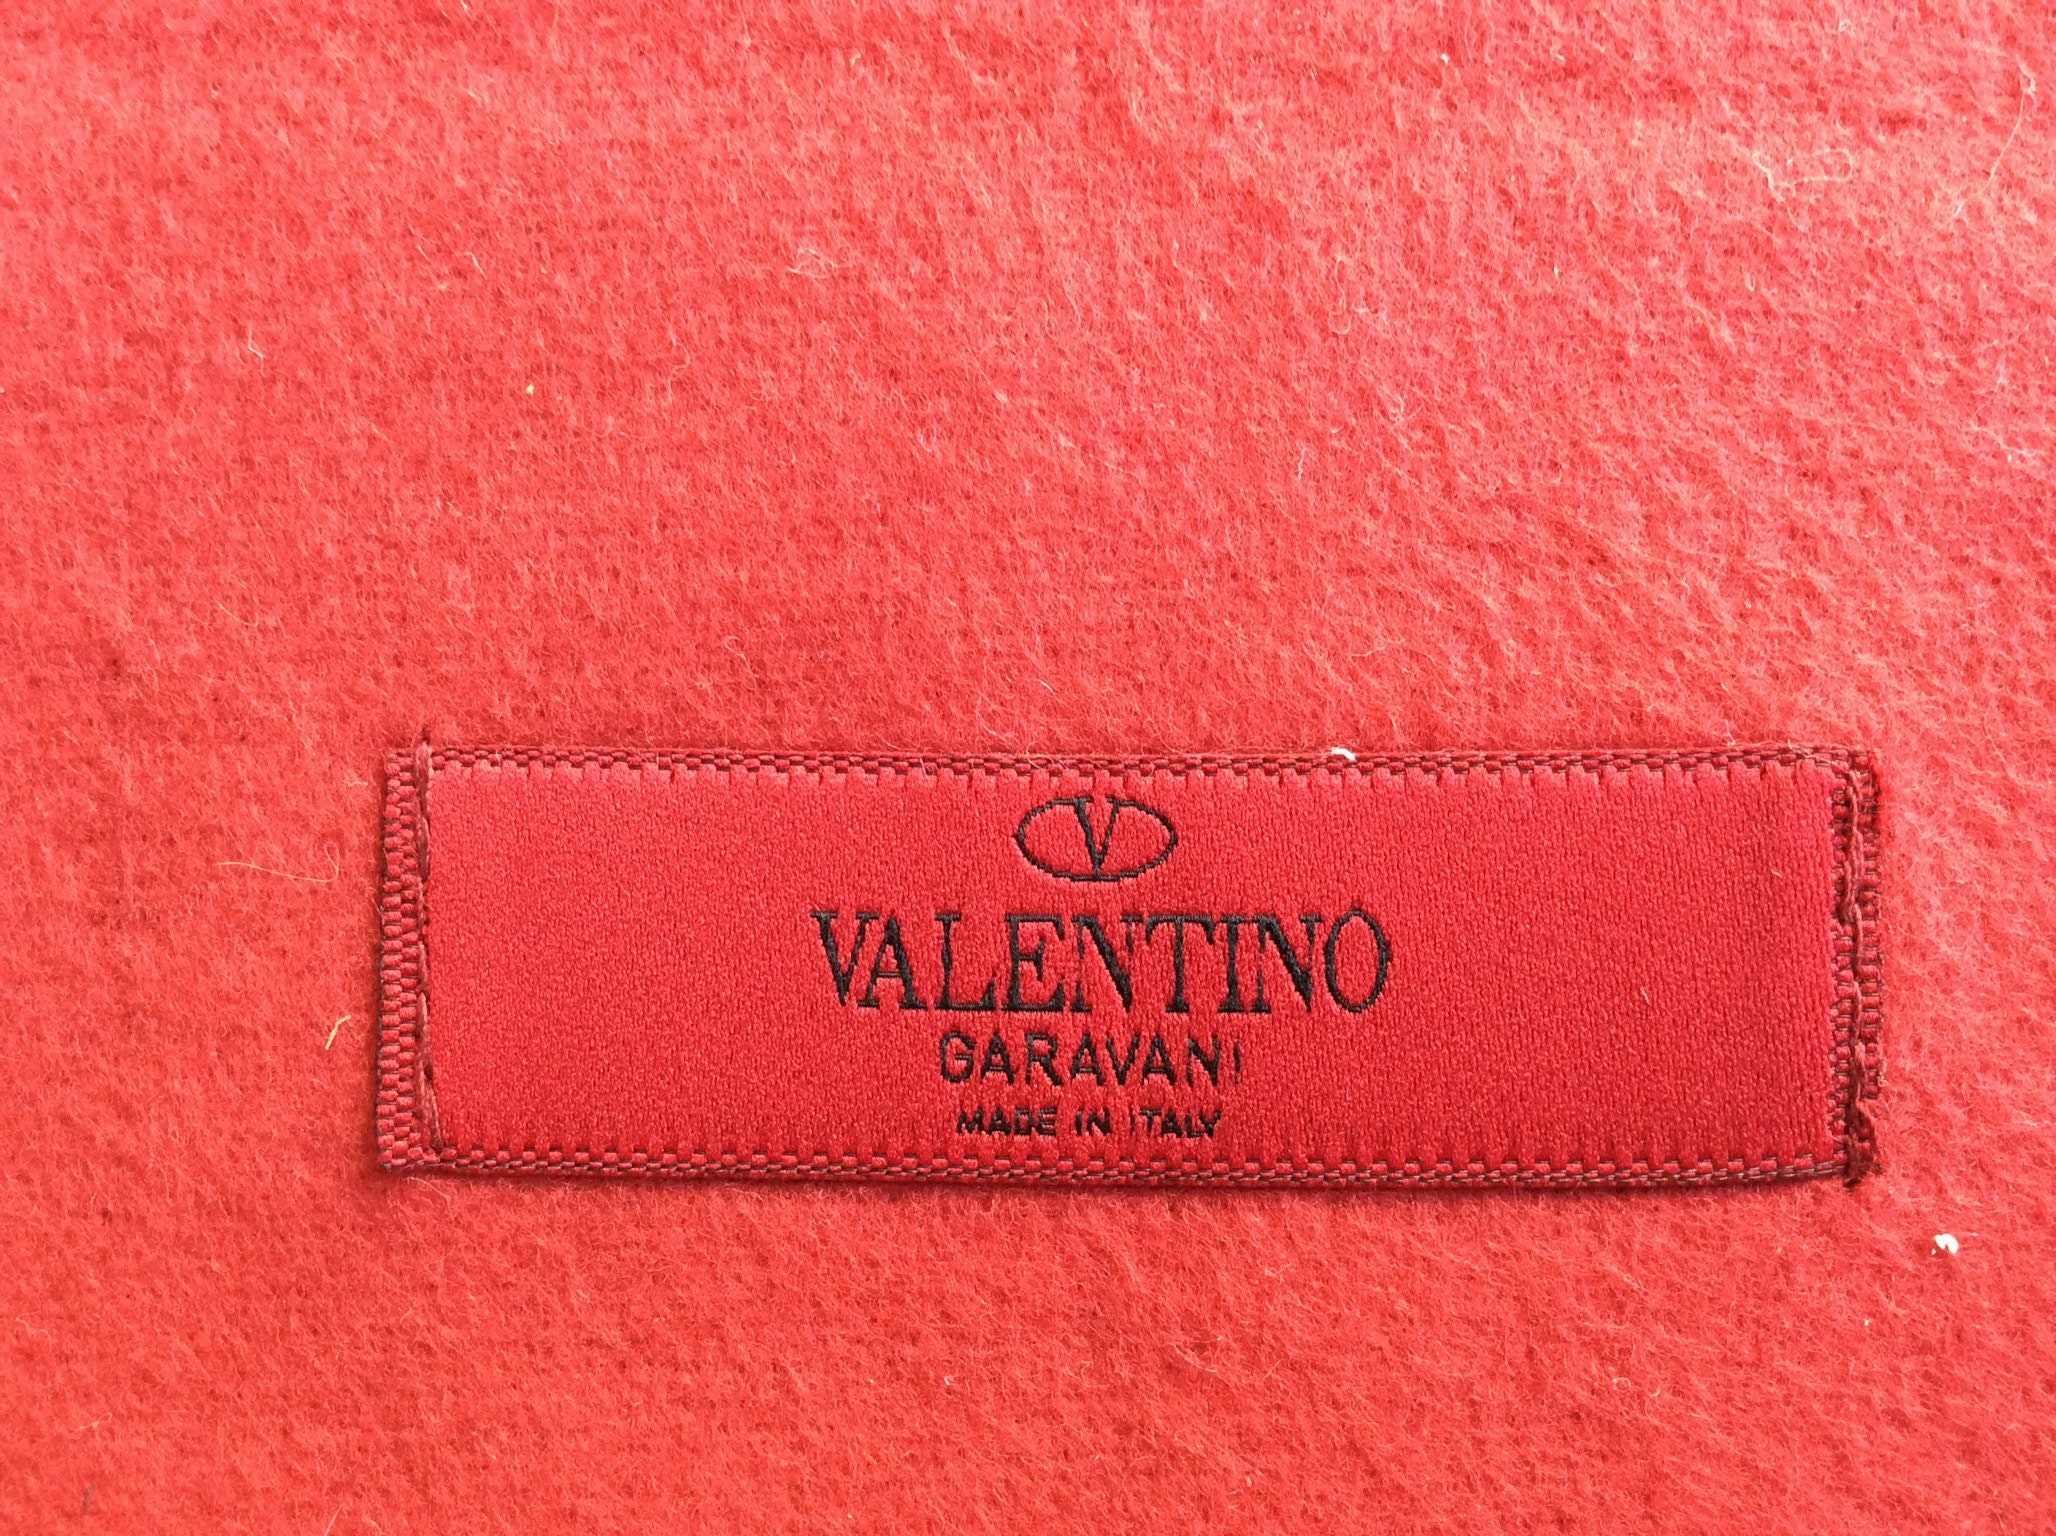 Valentino Garavani Red Dust Bag/ Designer Dust Bag/ Valentino Etsy Israel